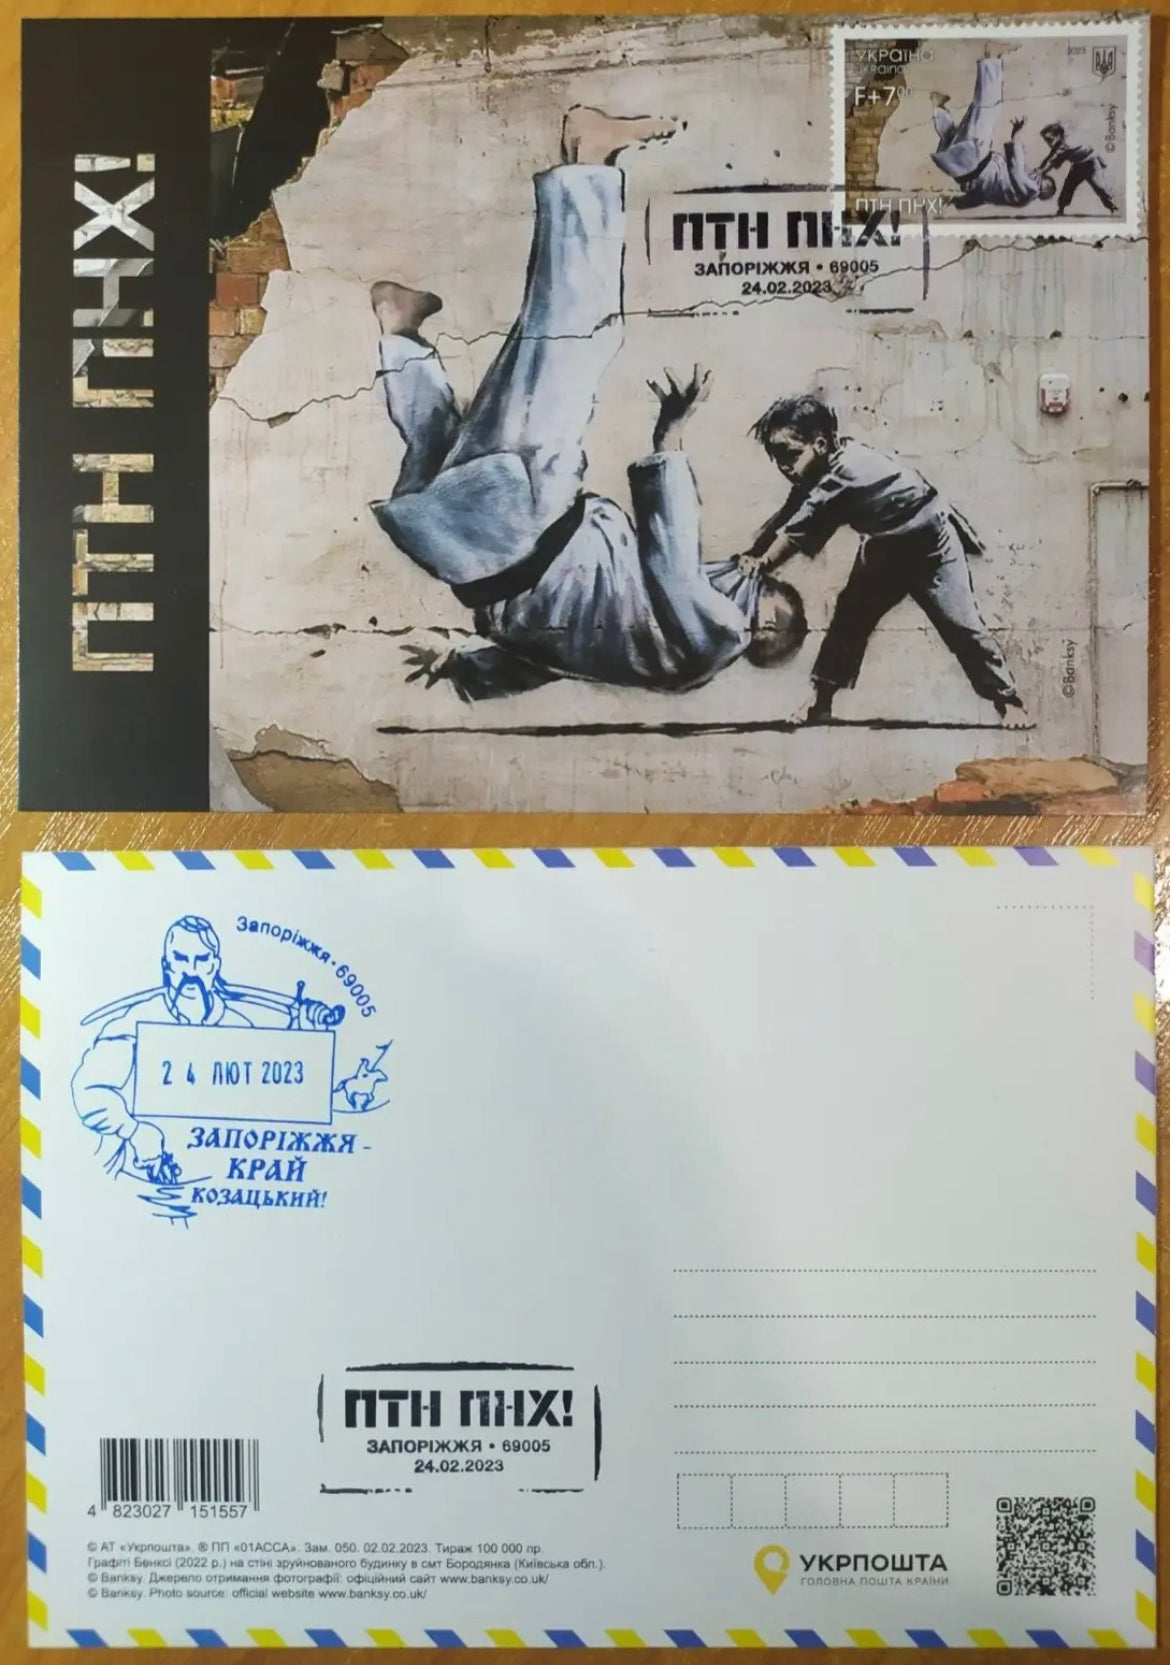 BANKSY “ПТН ПНХ!” Ukrainian stamps from Ukrposhta to support Ukrainians!!